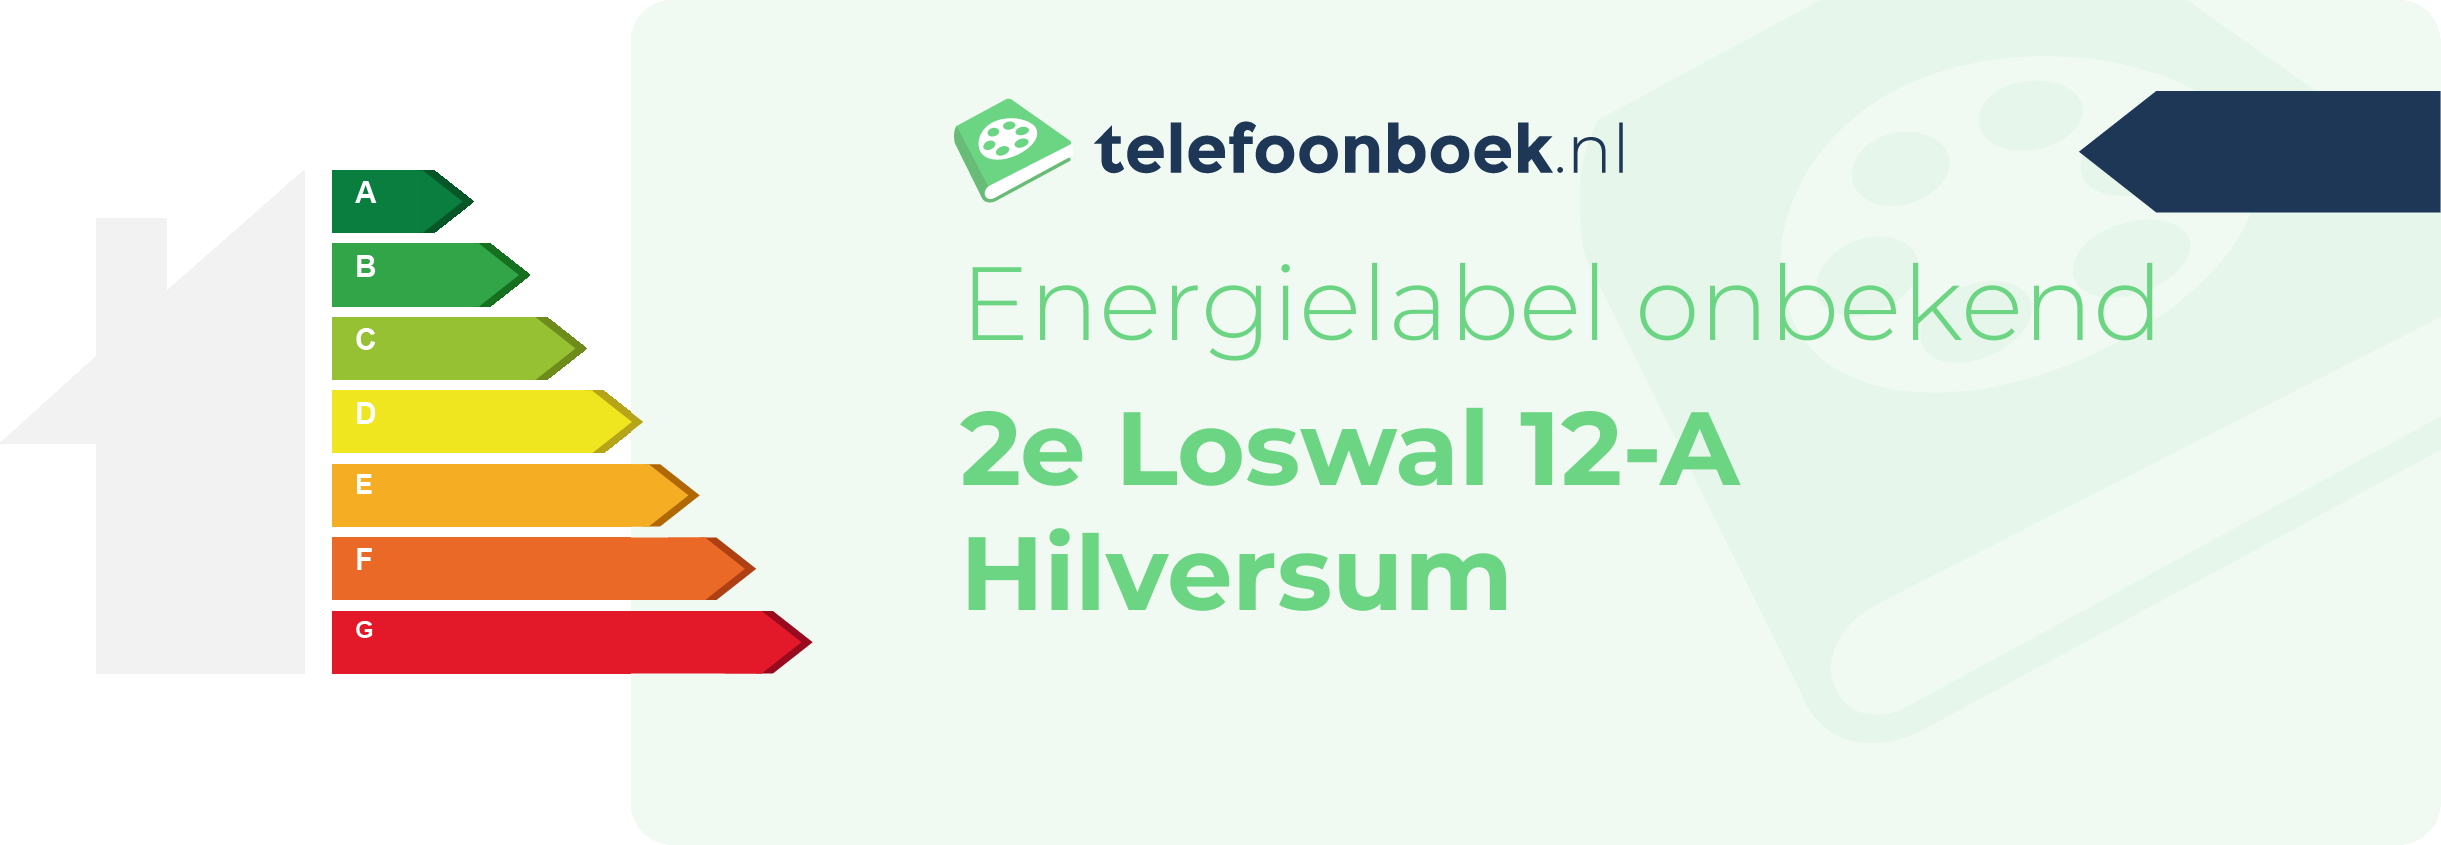 Energielabel 2e Loswal 12-A Hilversum